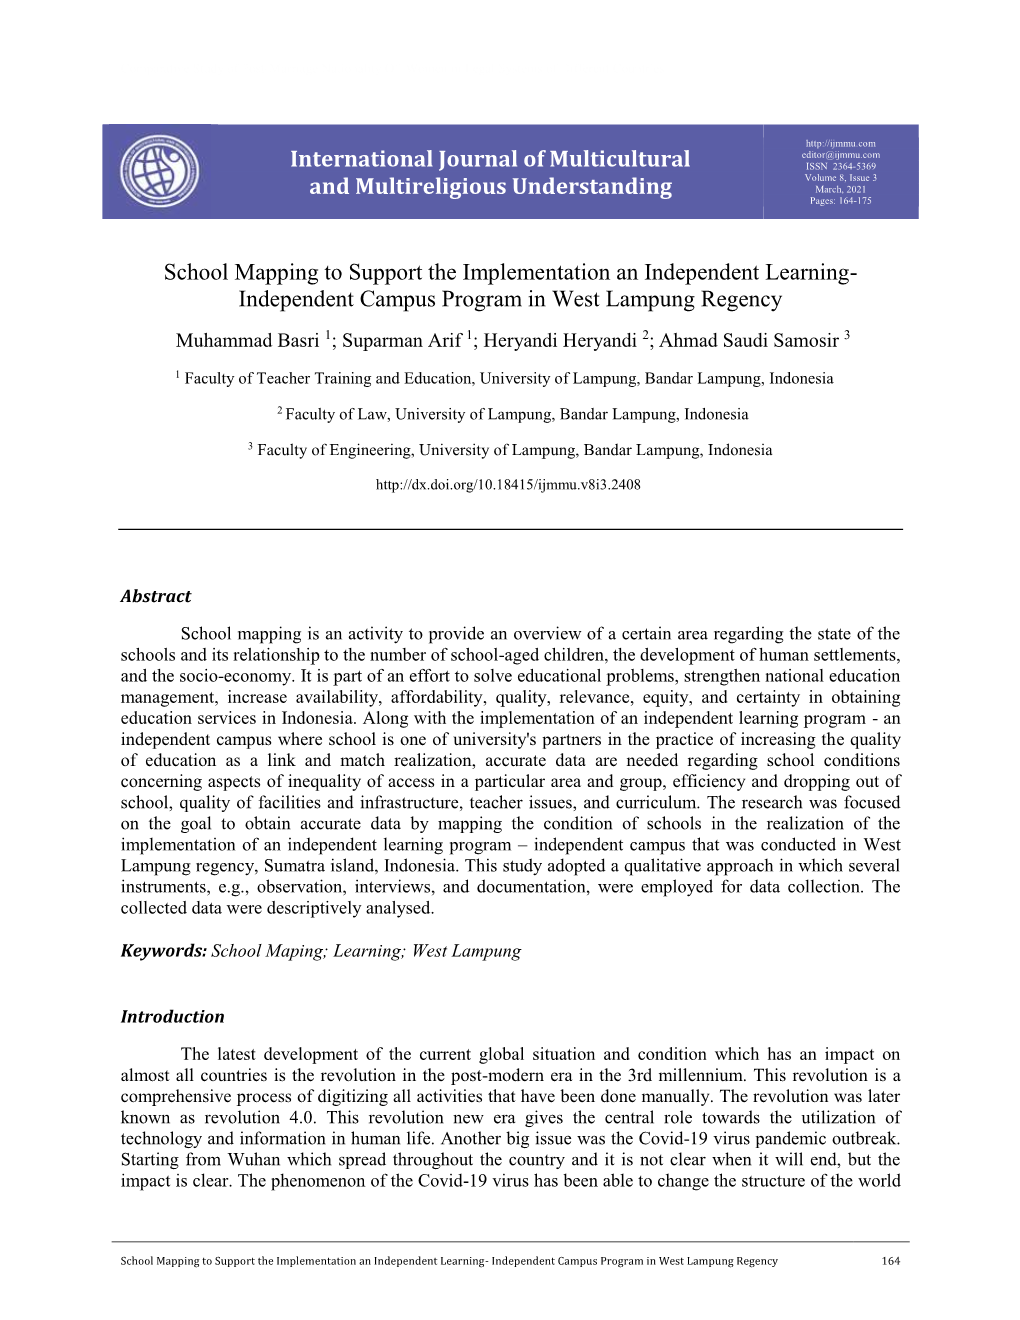 International Journal of Multicultural and Multireligious Understanding (IJMMU) Vol